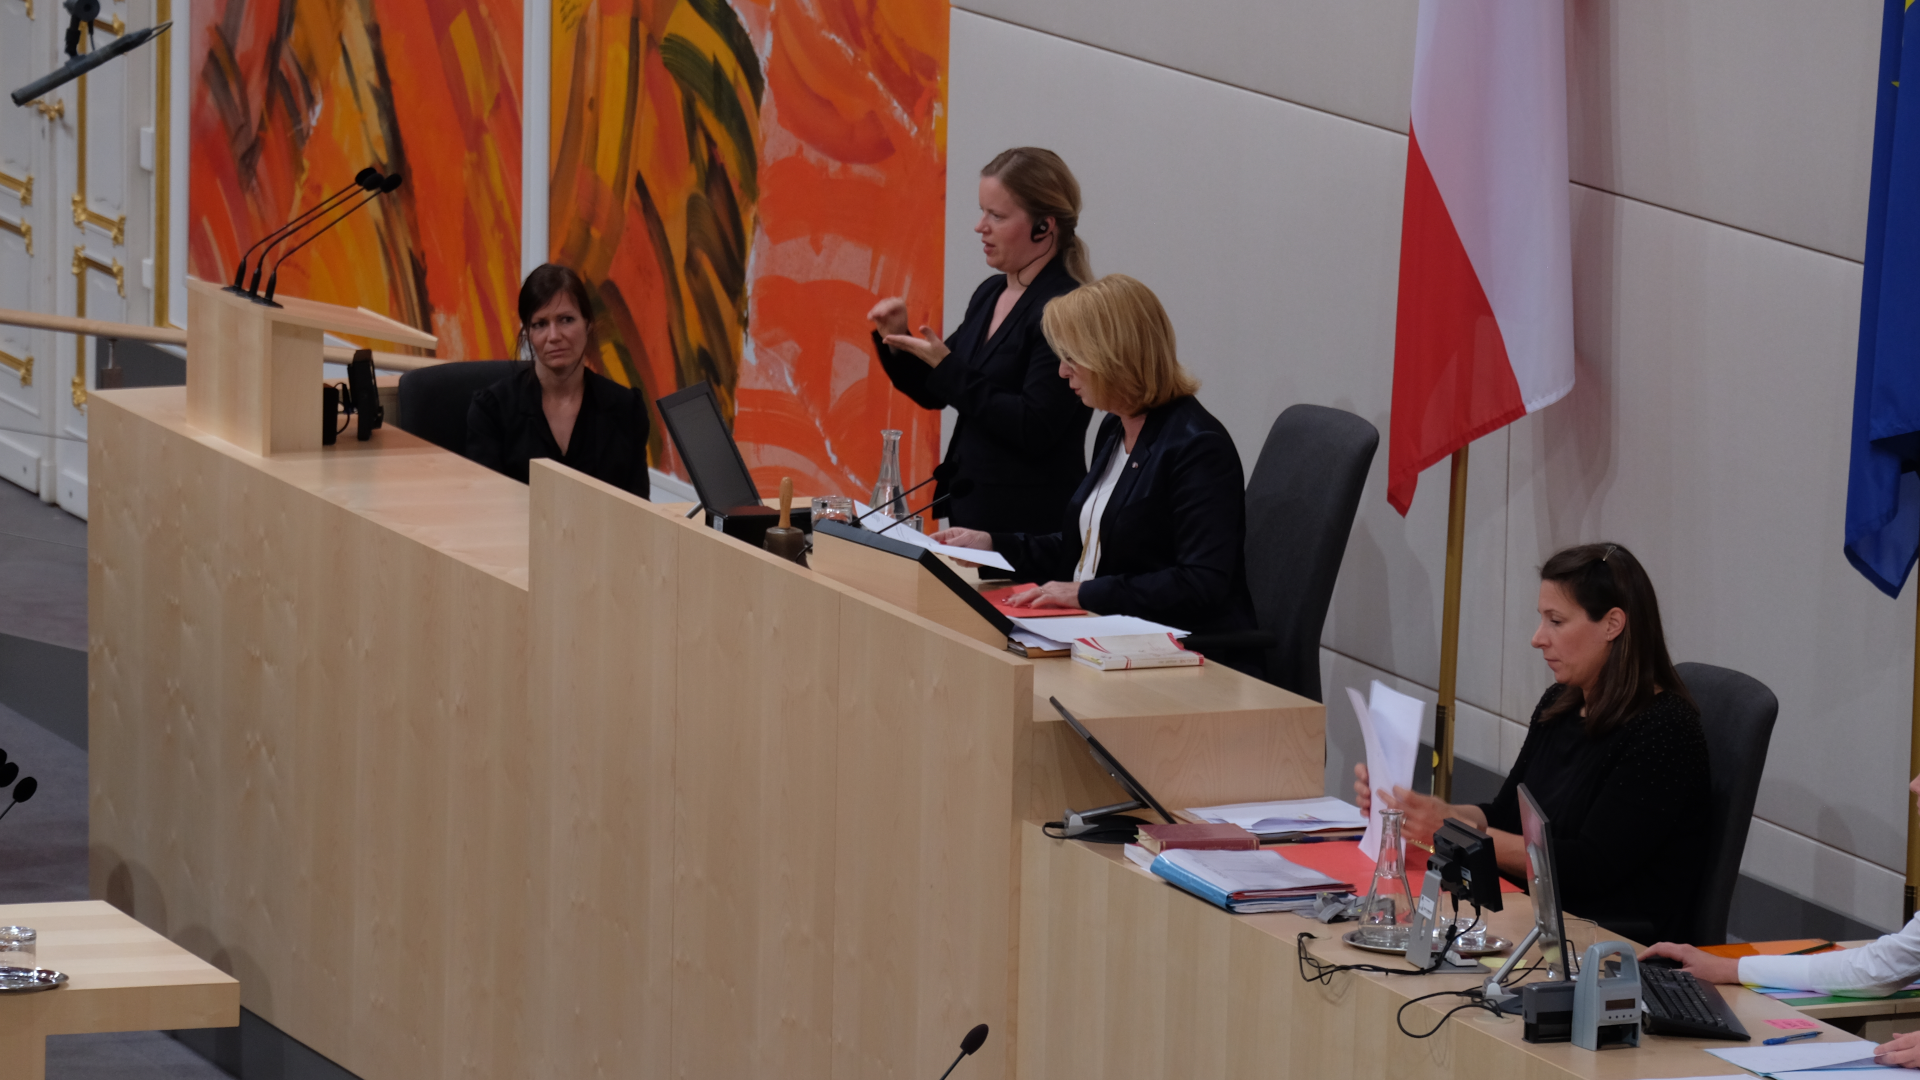 Corona-Krise-Doris Bures-Wien-Hofburg-Gesetzgebung-Nationalrat-Parlament